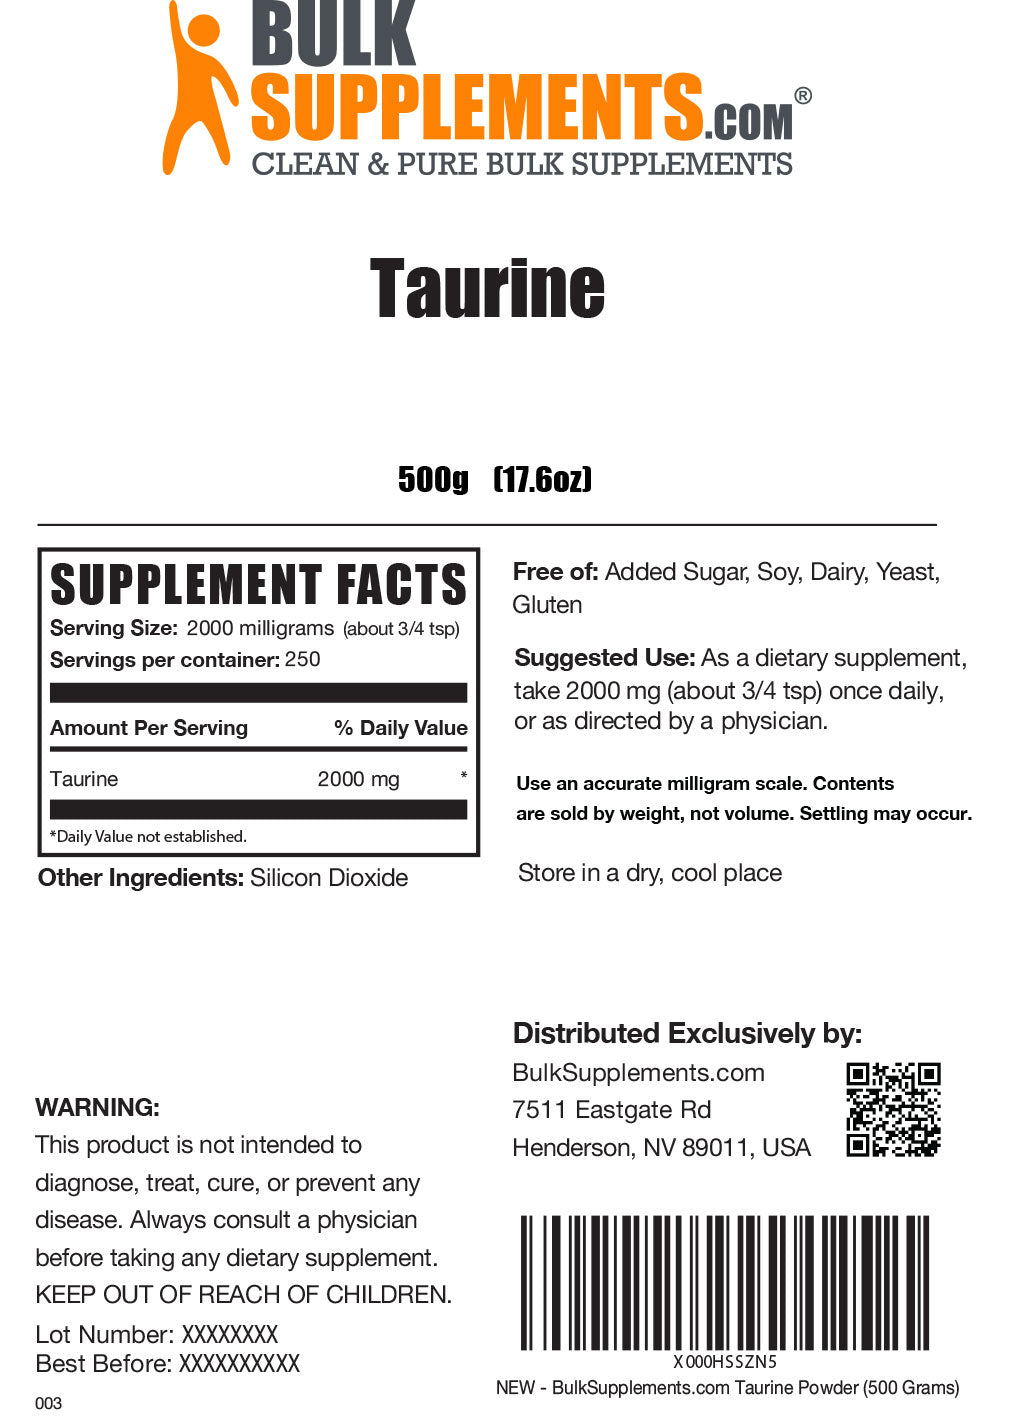 Taurine powder label 500g